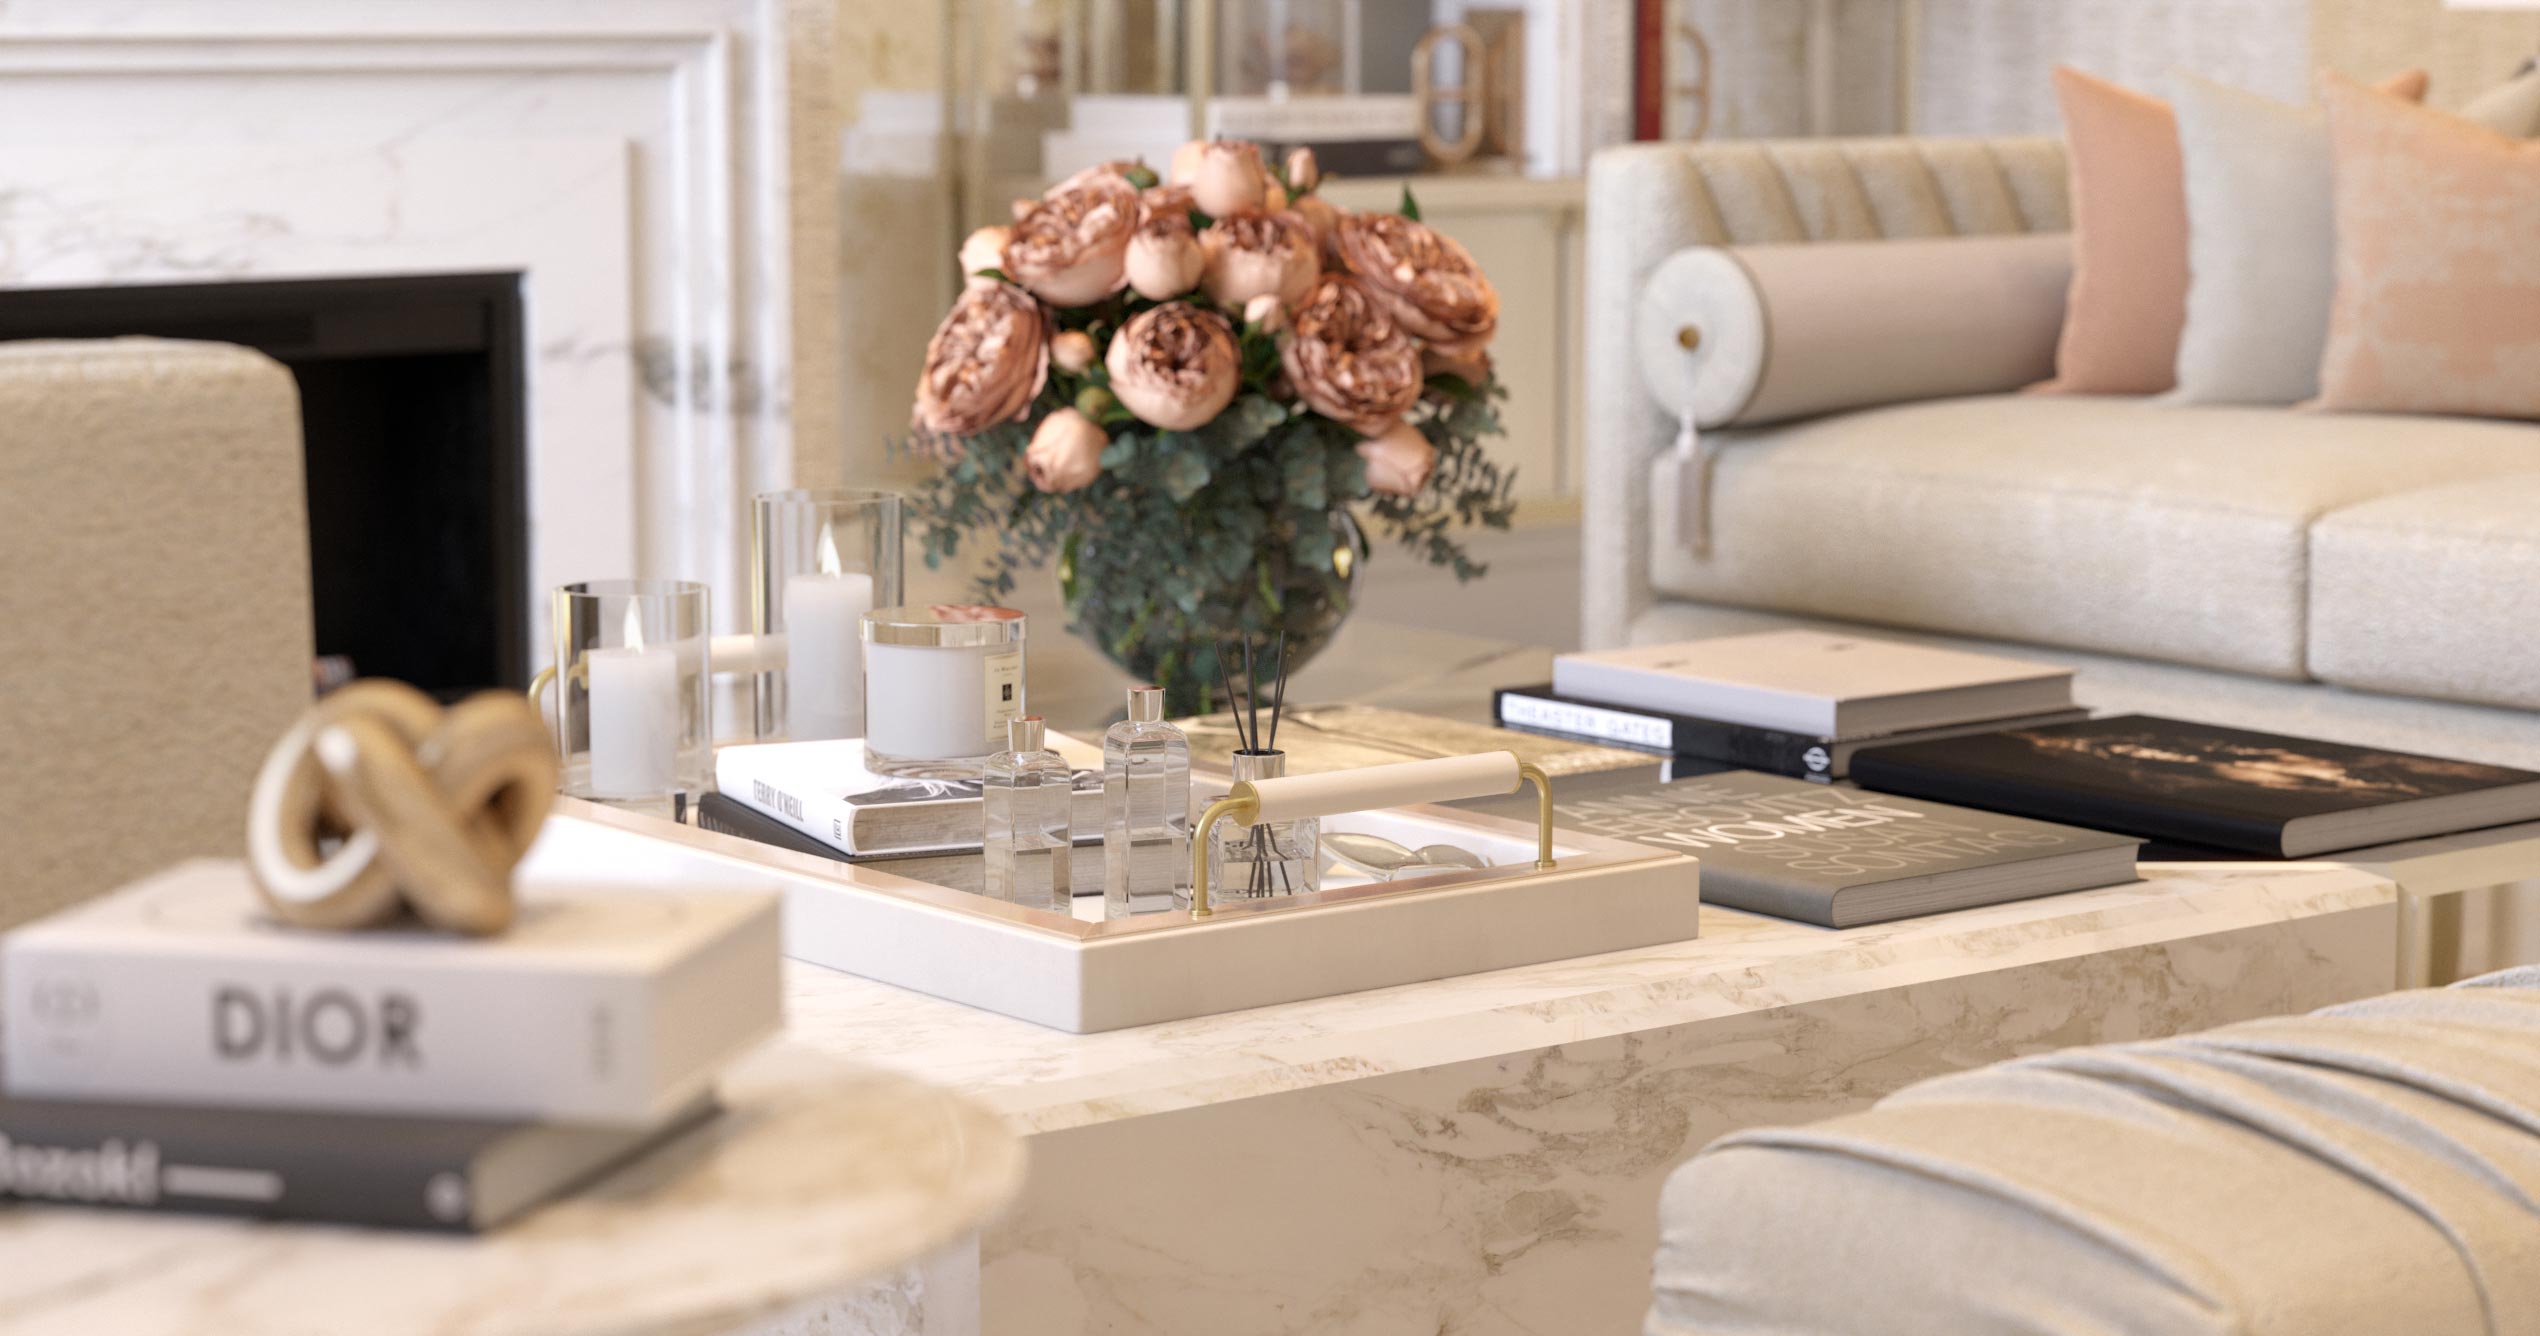 London House Luxury Interior Design Kitchen Bedroom Lounge Interior Design CGI Visuals by Unit4 London